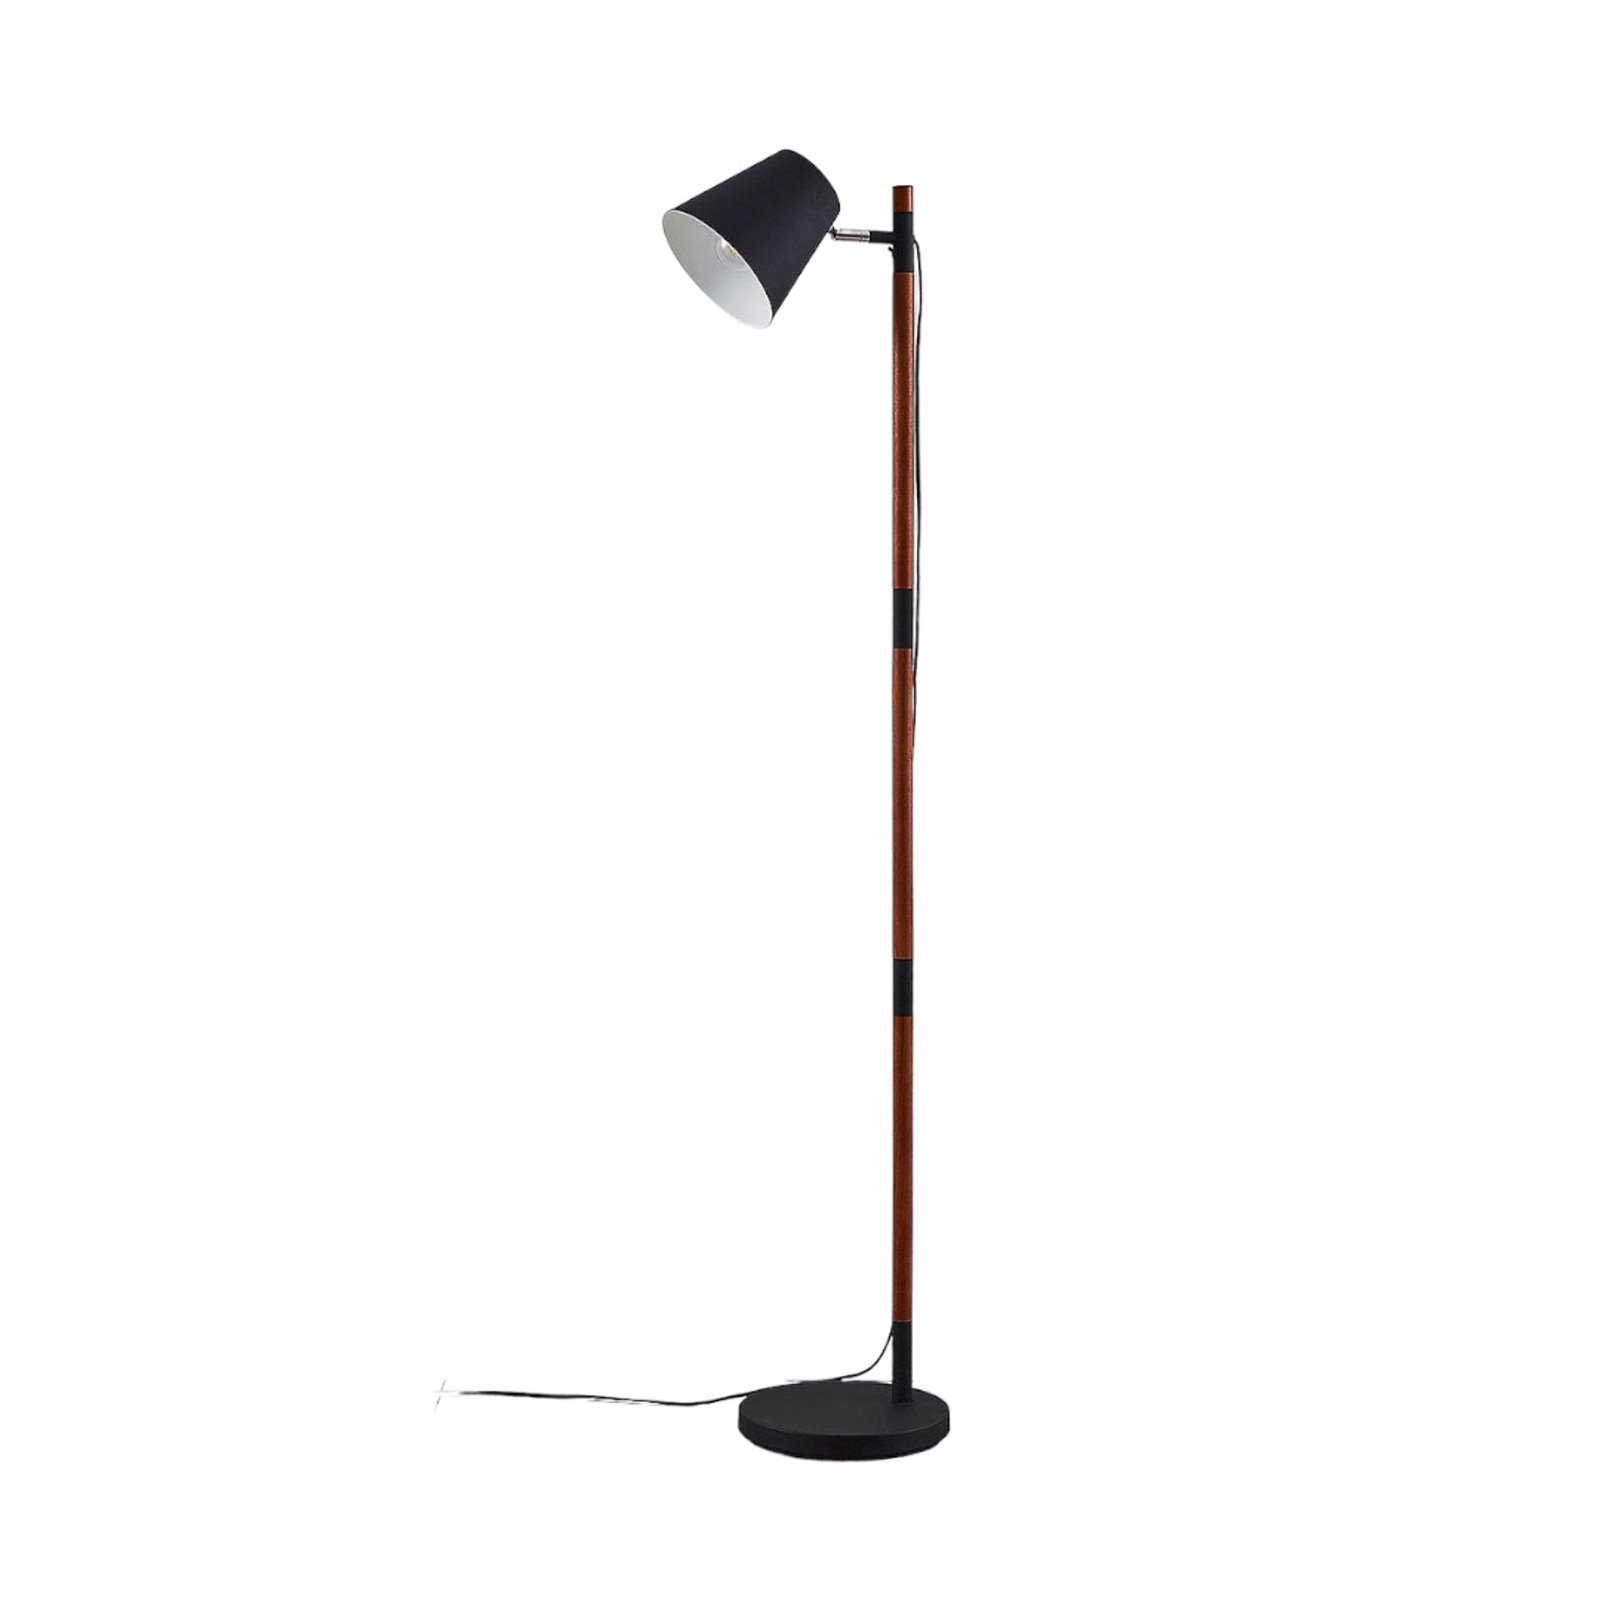 Floor lamp Birte, black with a wooden element